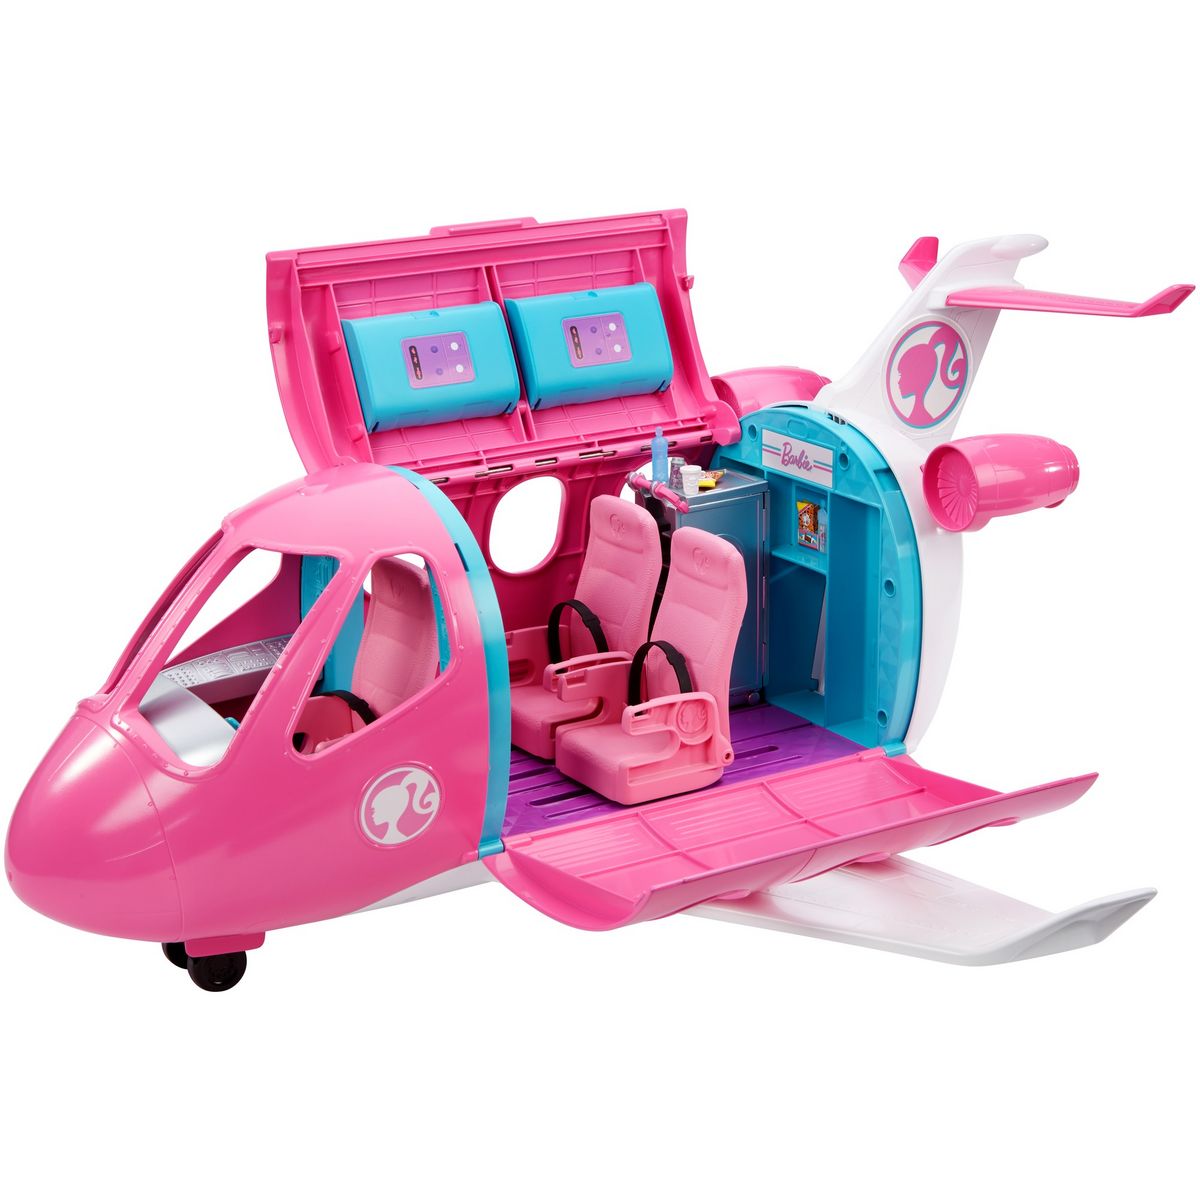 Avion de Rêve Barbie